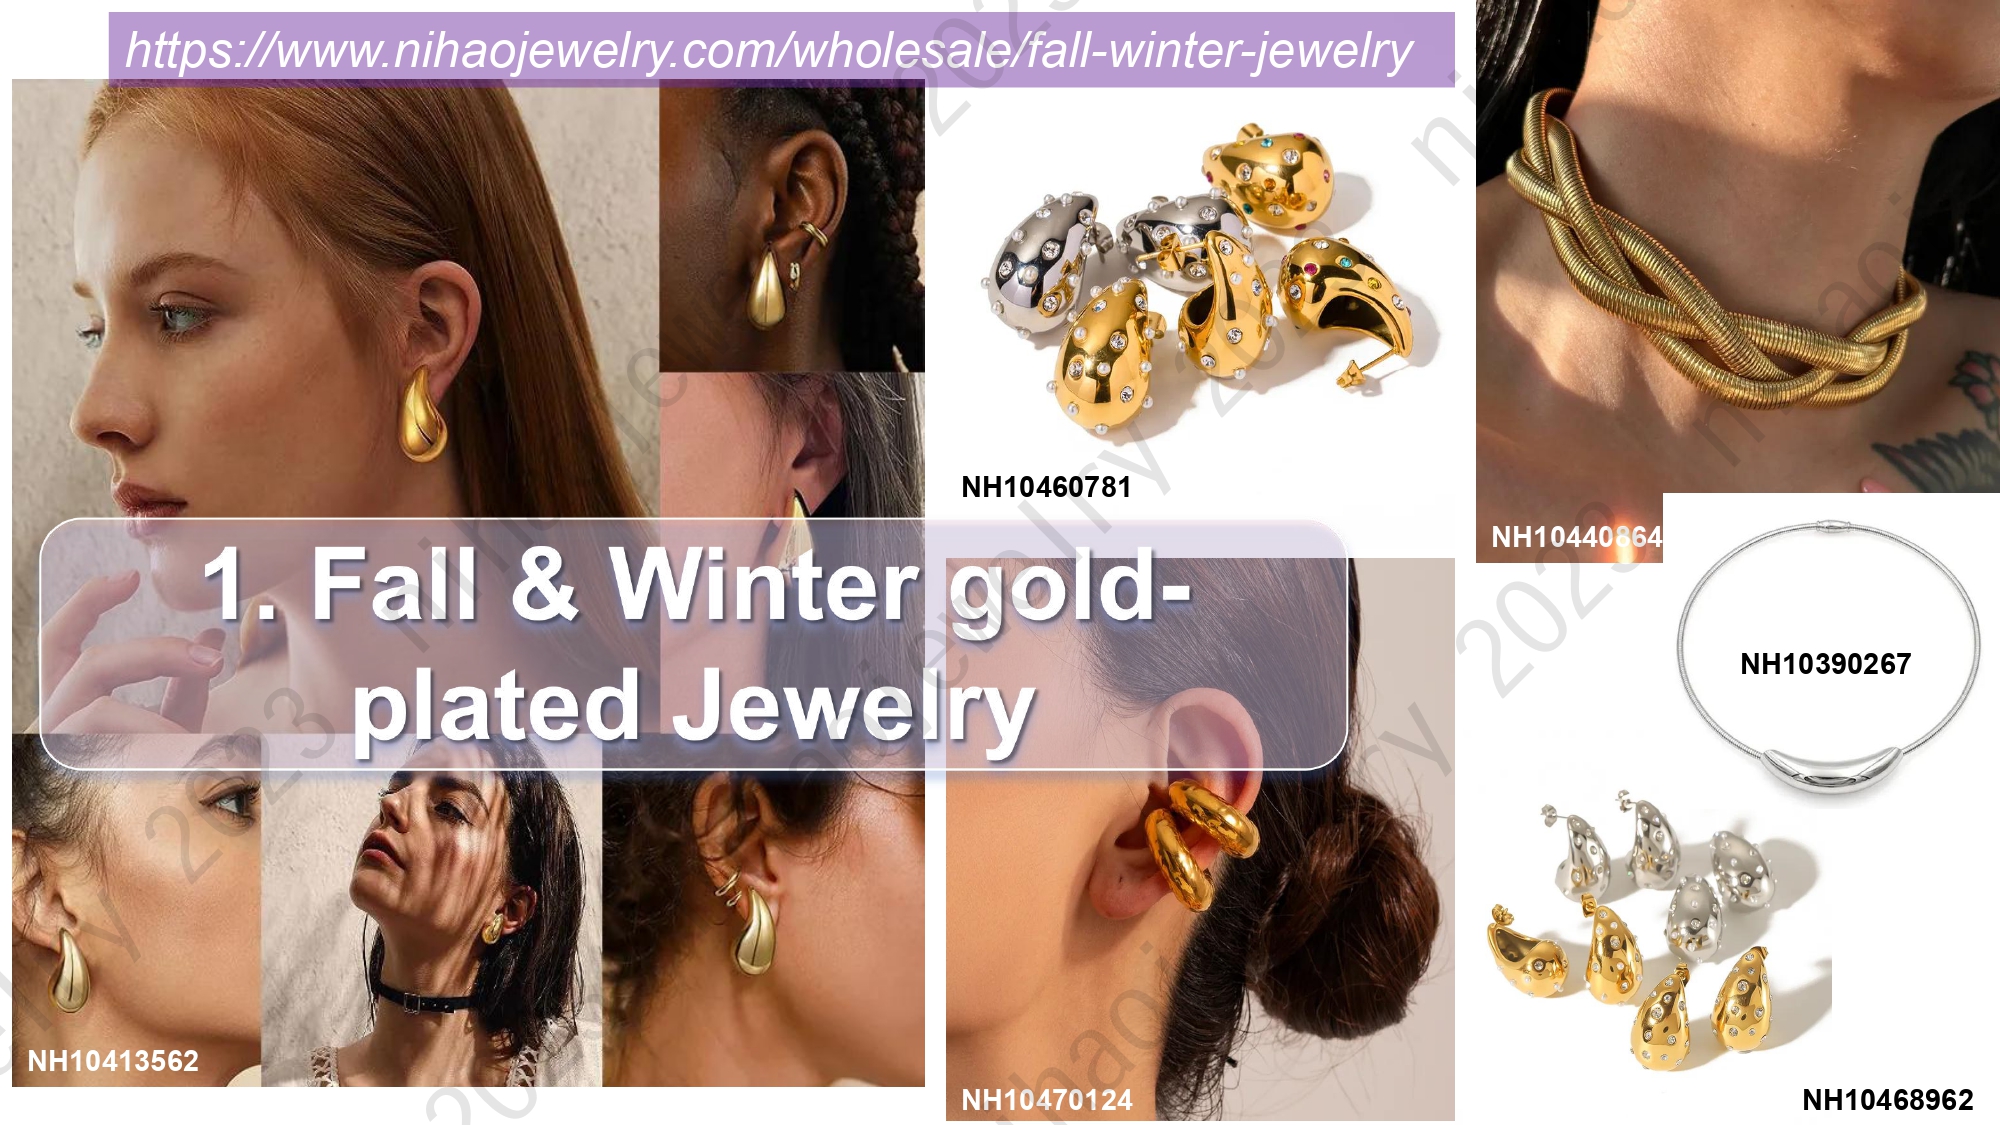 Wholesale Fall & Winter Jewelry 